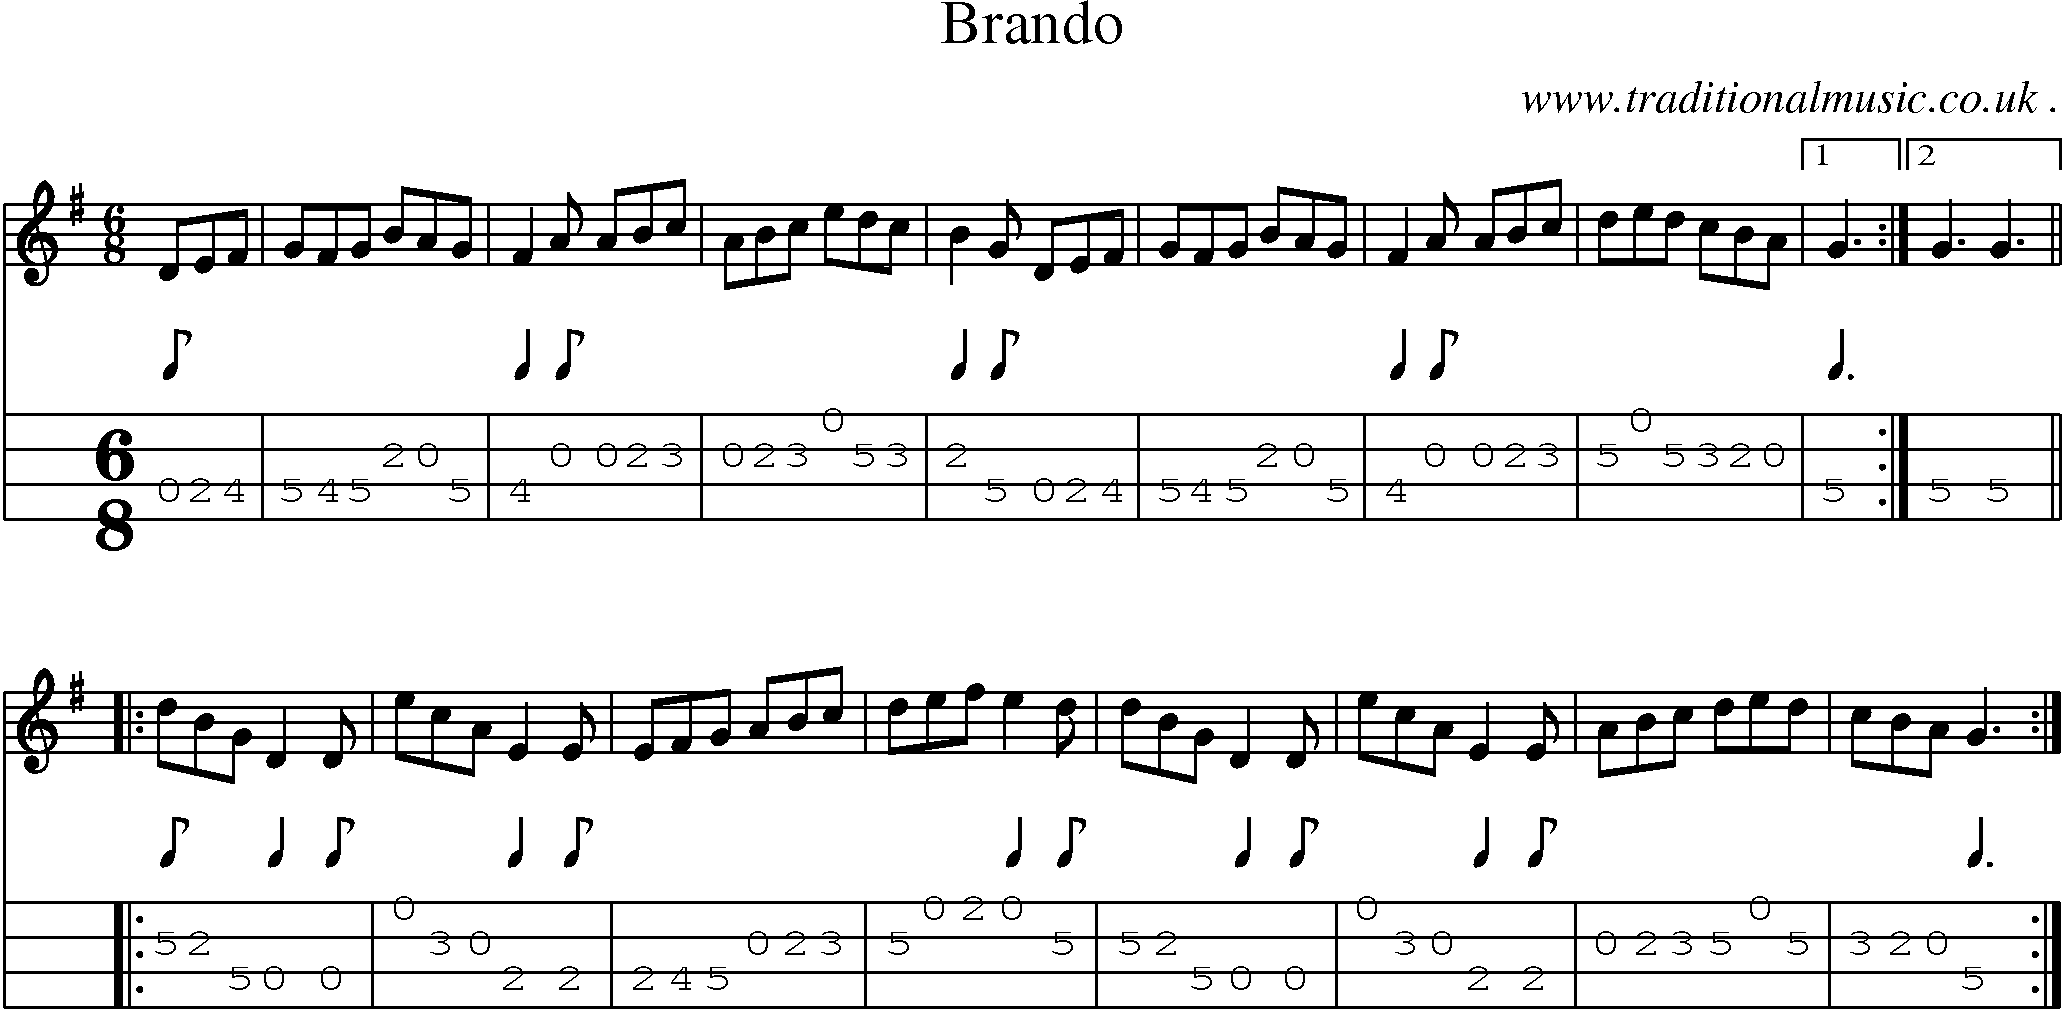 Sheet-Music and Mandolin Tabs for Brando